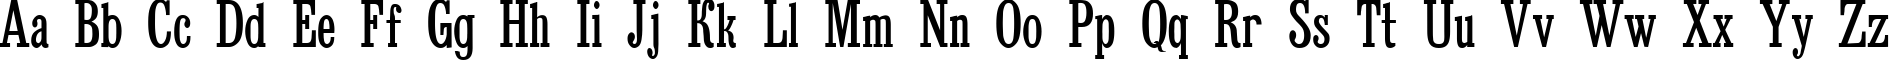 Пример написания английского алфавита шрифтом Bruskovaya Comp Plain105n